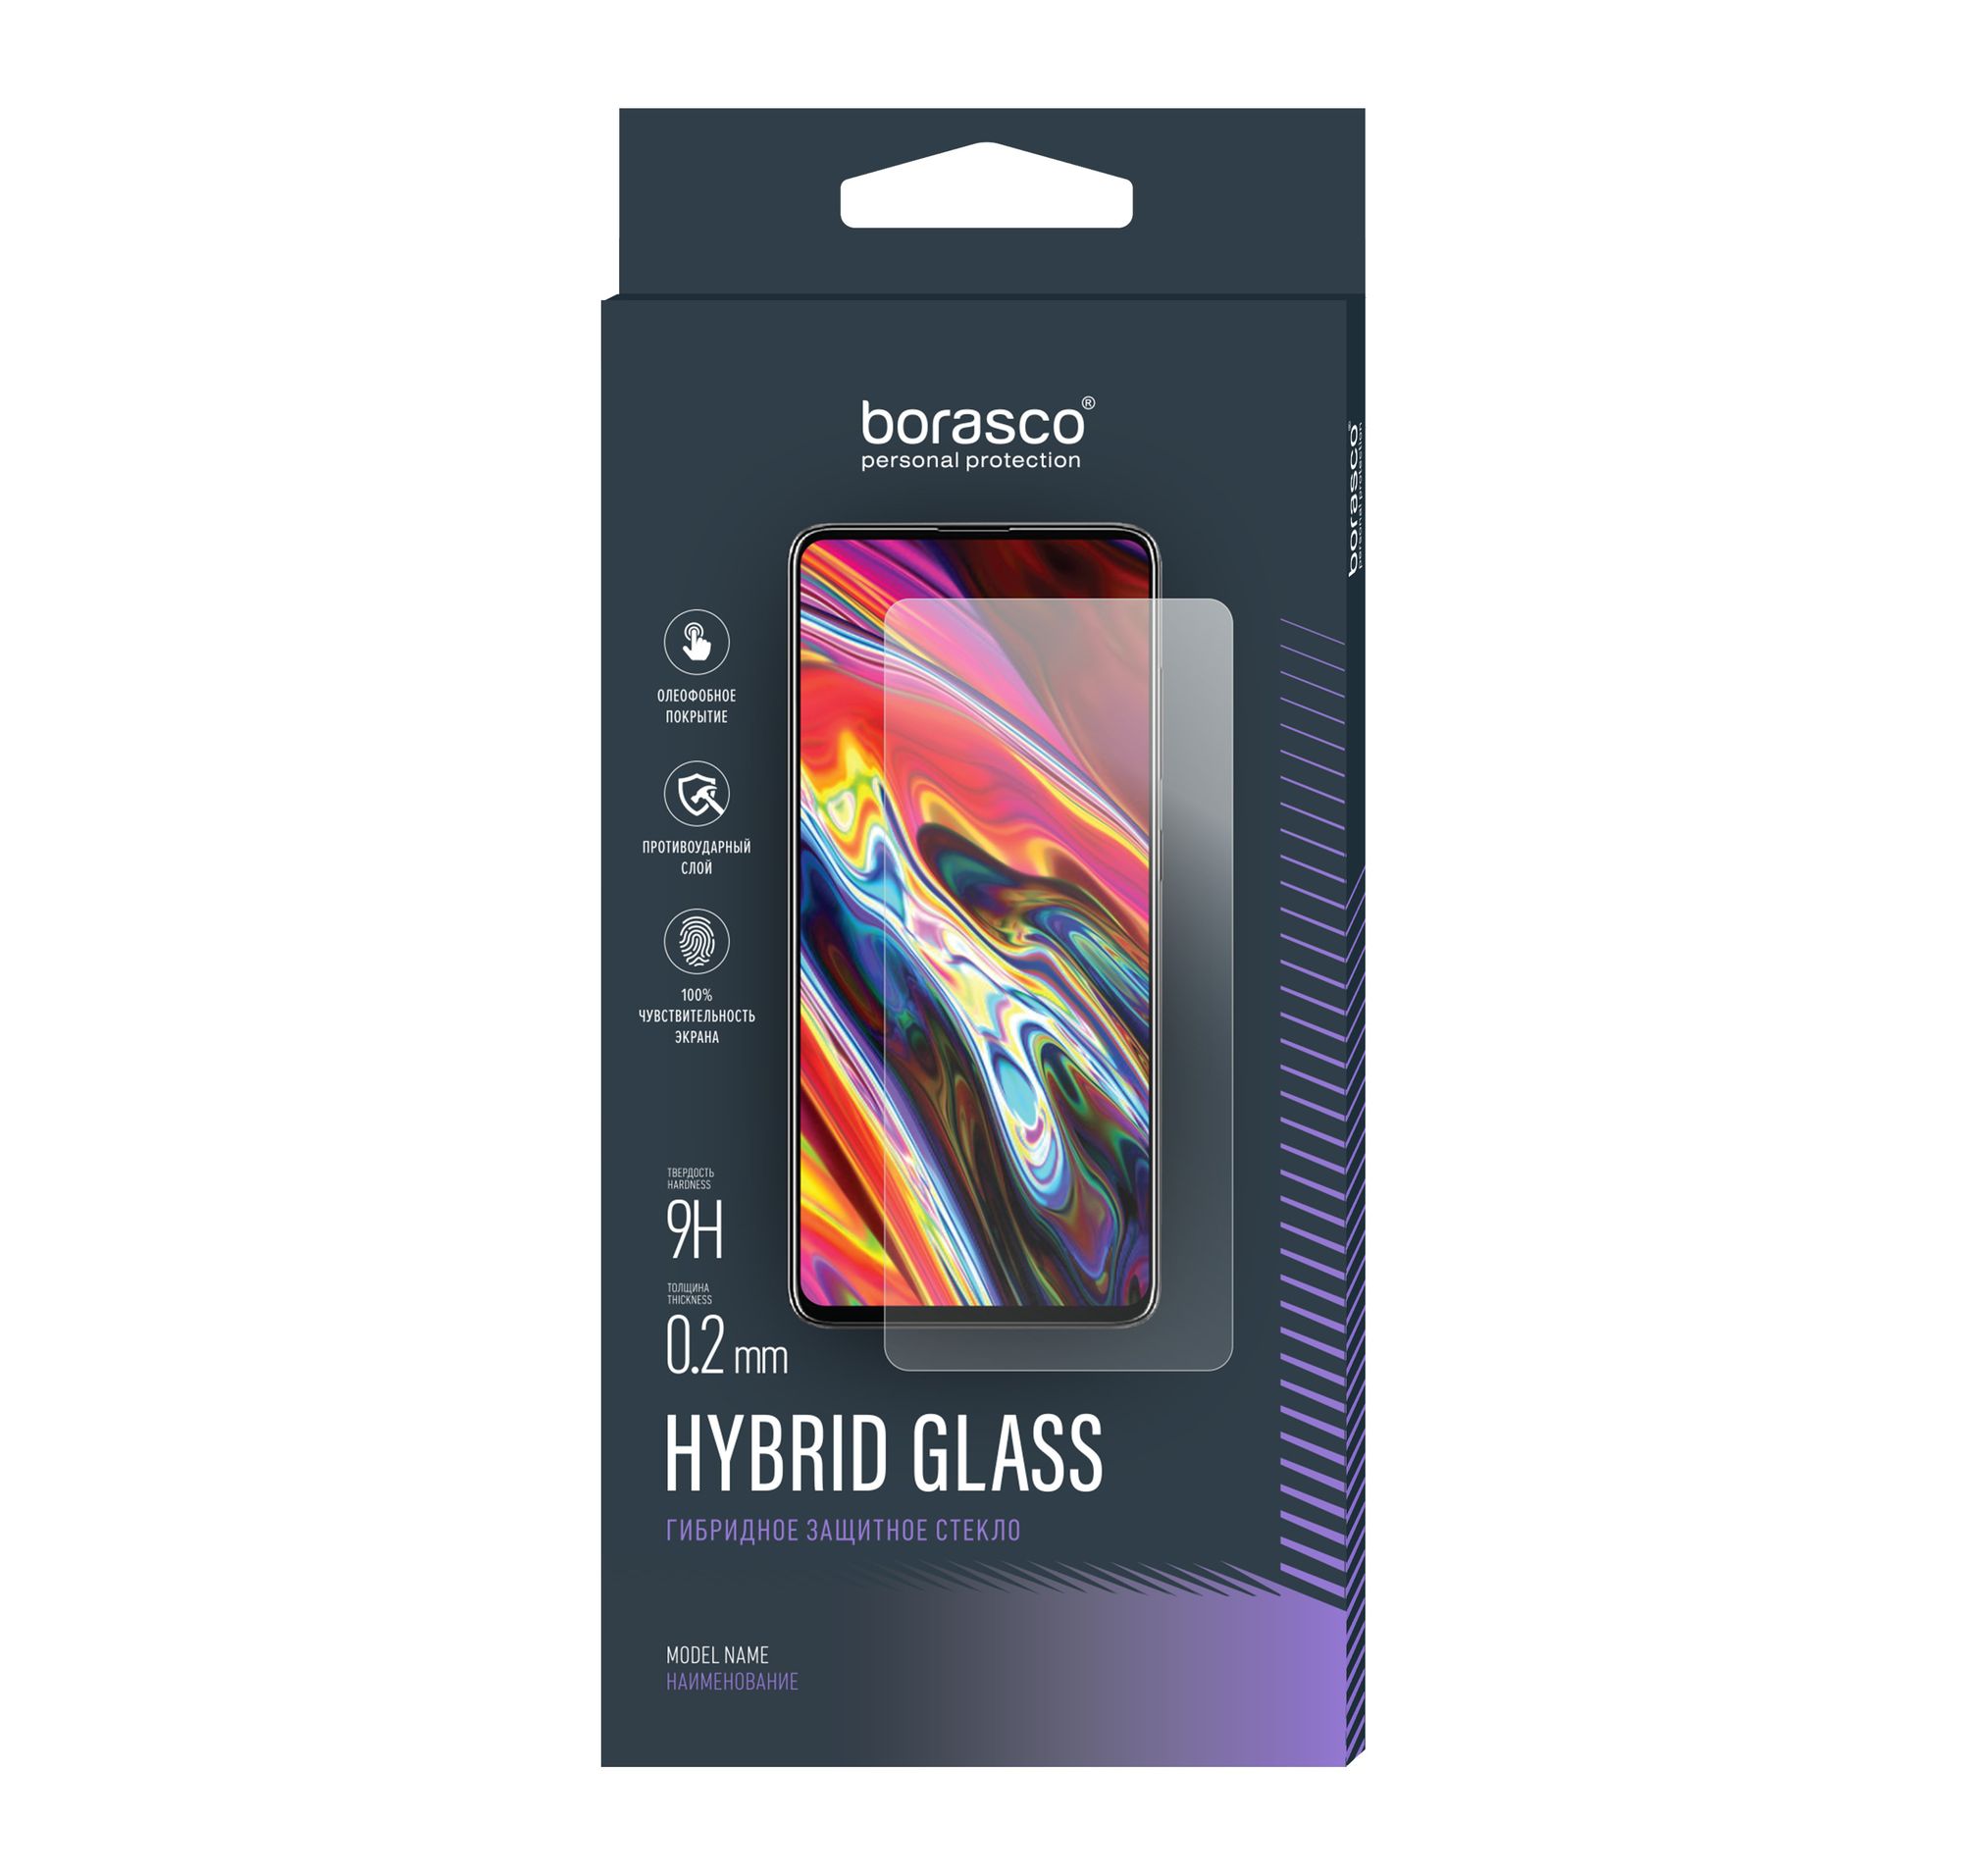 стекло защитное hybrid glass vsp 0 26 мм universal 7 Стекло защитное Hybrid Glass VSP 0,26 мм для Universal 4